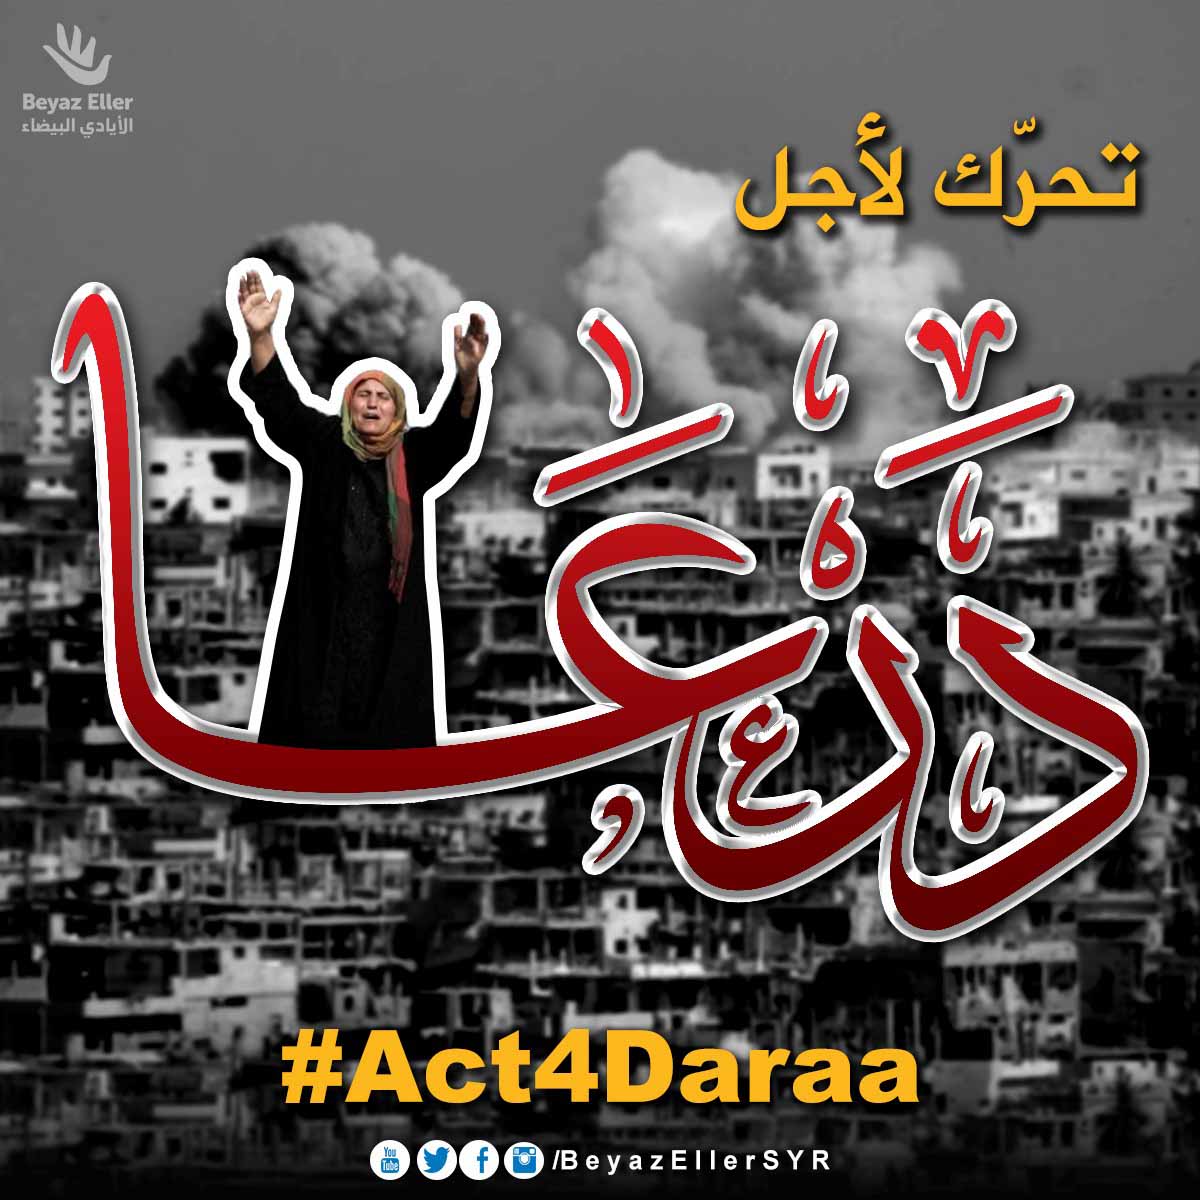 حملة درعا تستغيث